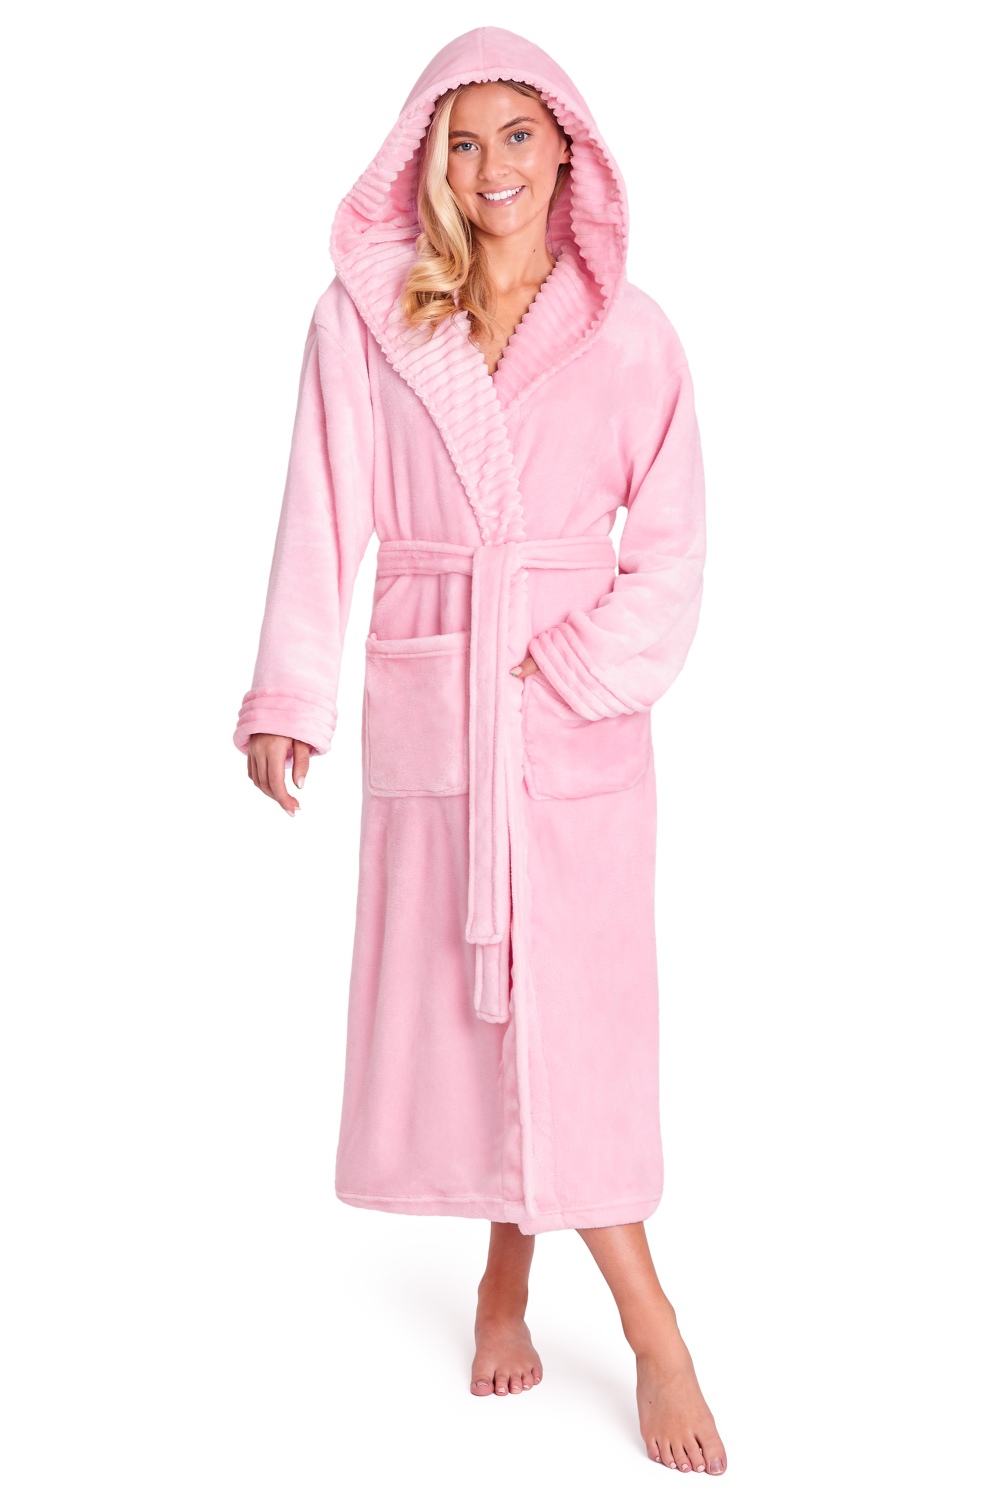 CityComfort Fluffy Super Soft Hooded Dressing Gown for Women | eBay